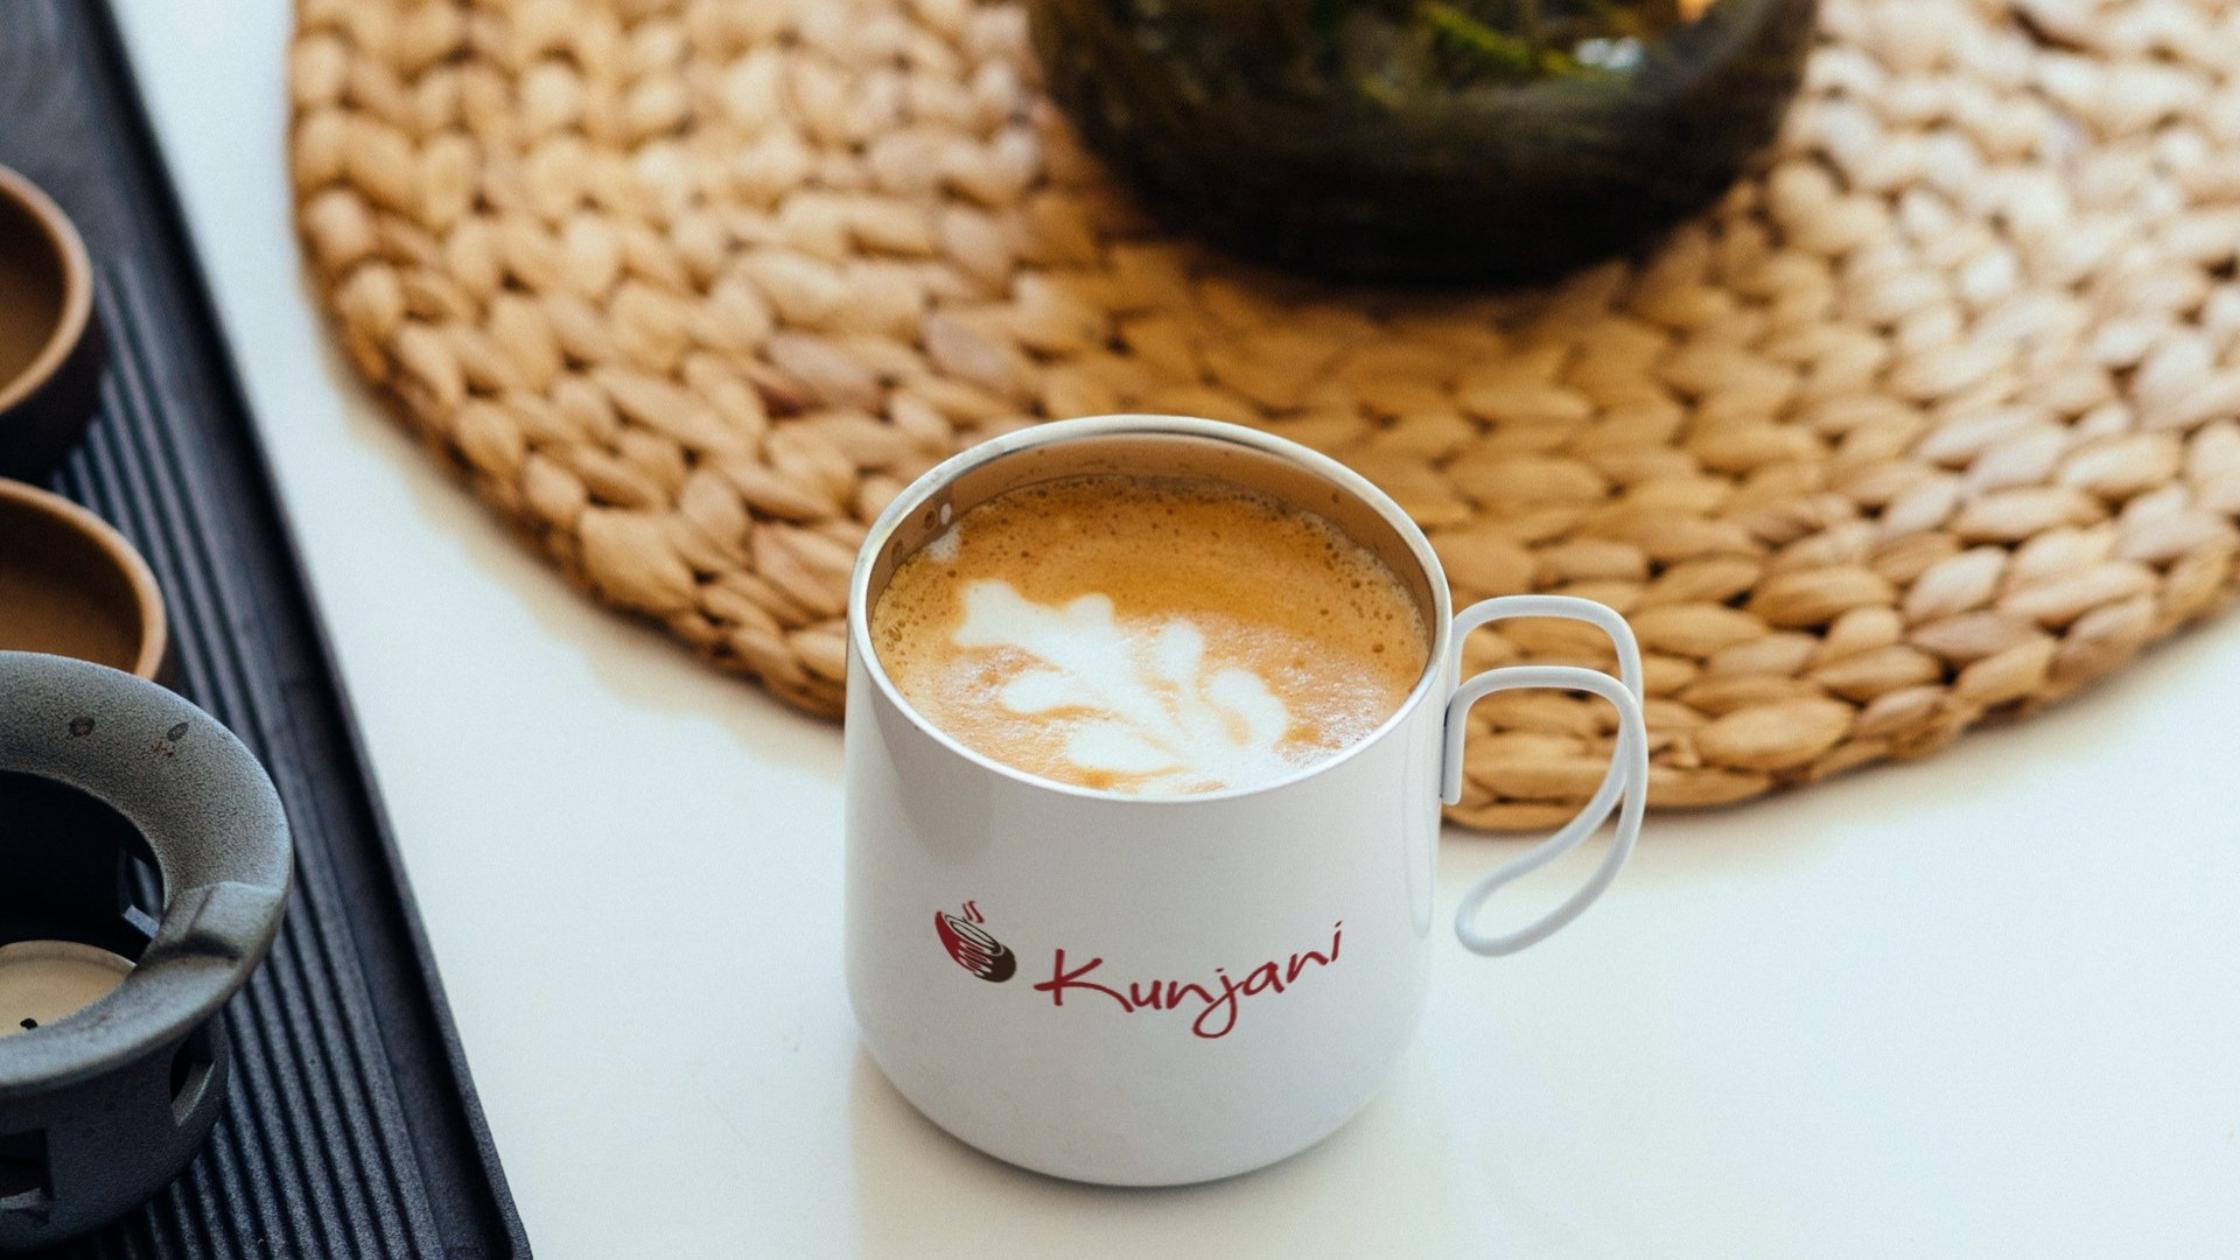 Kunjani specialty coffee